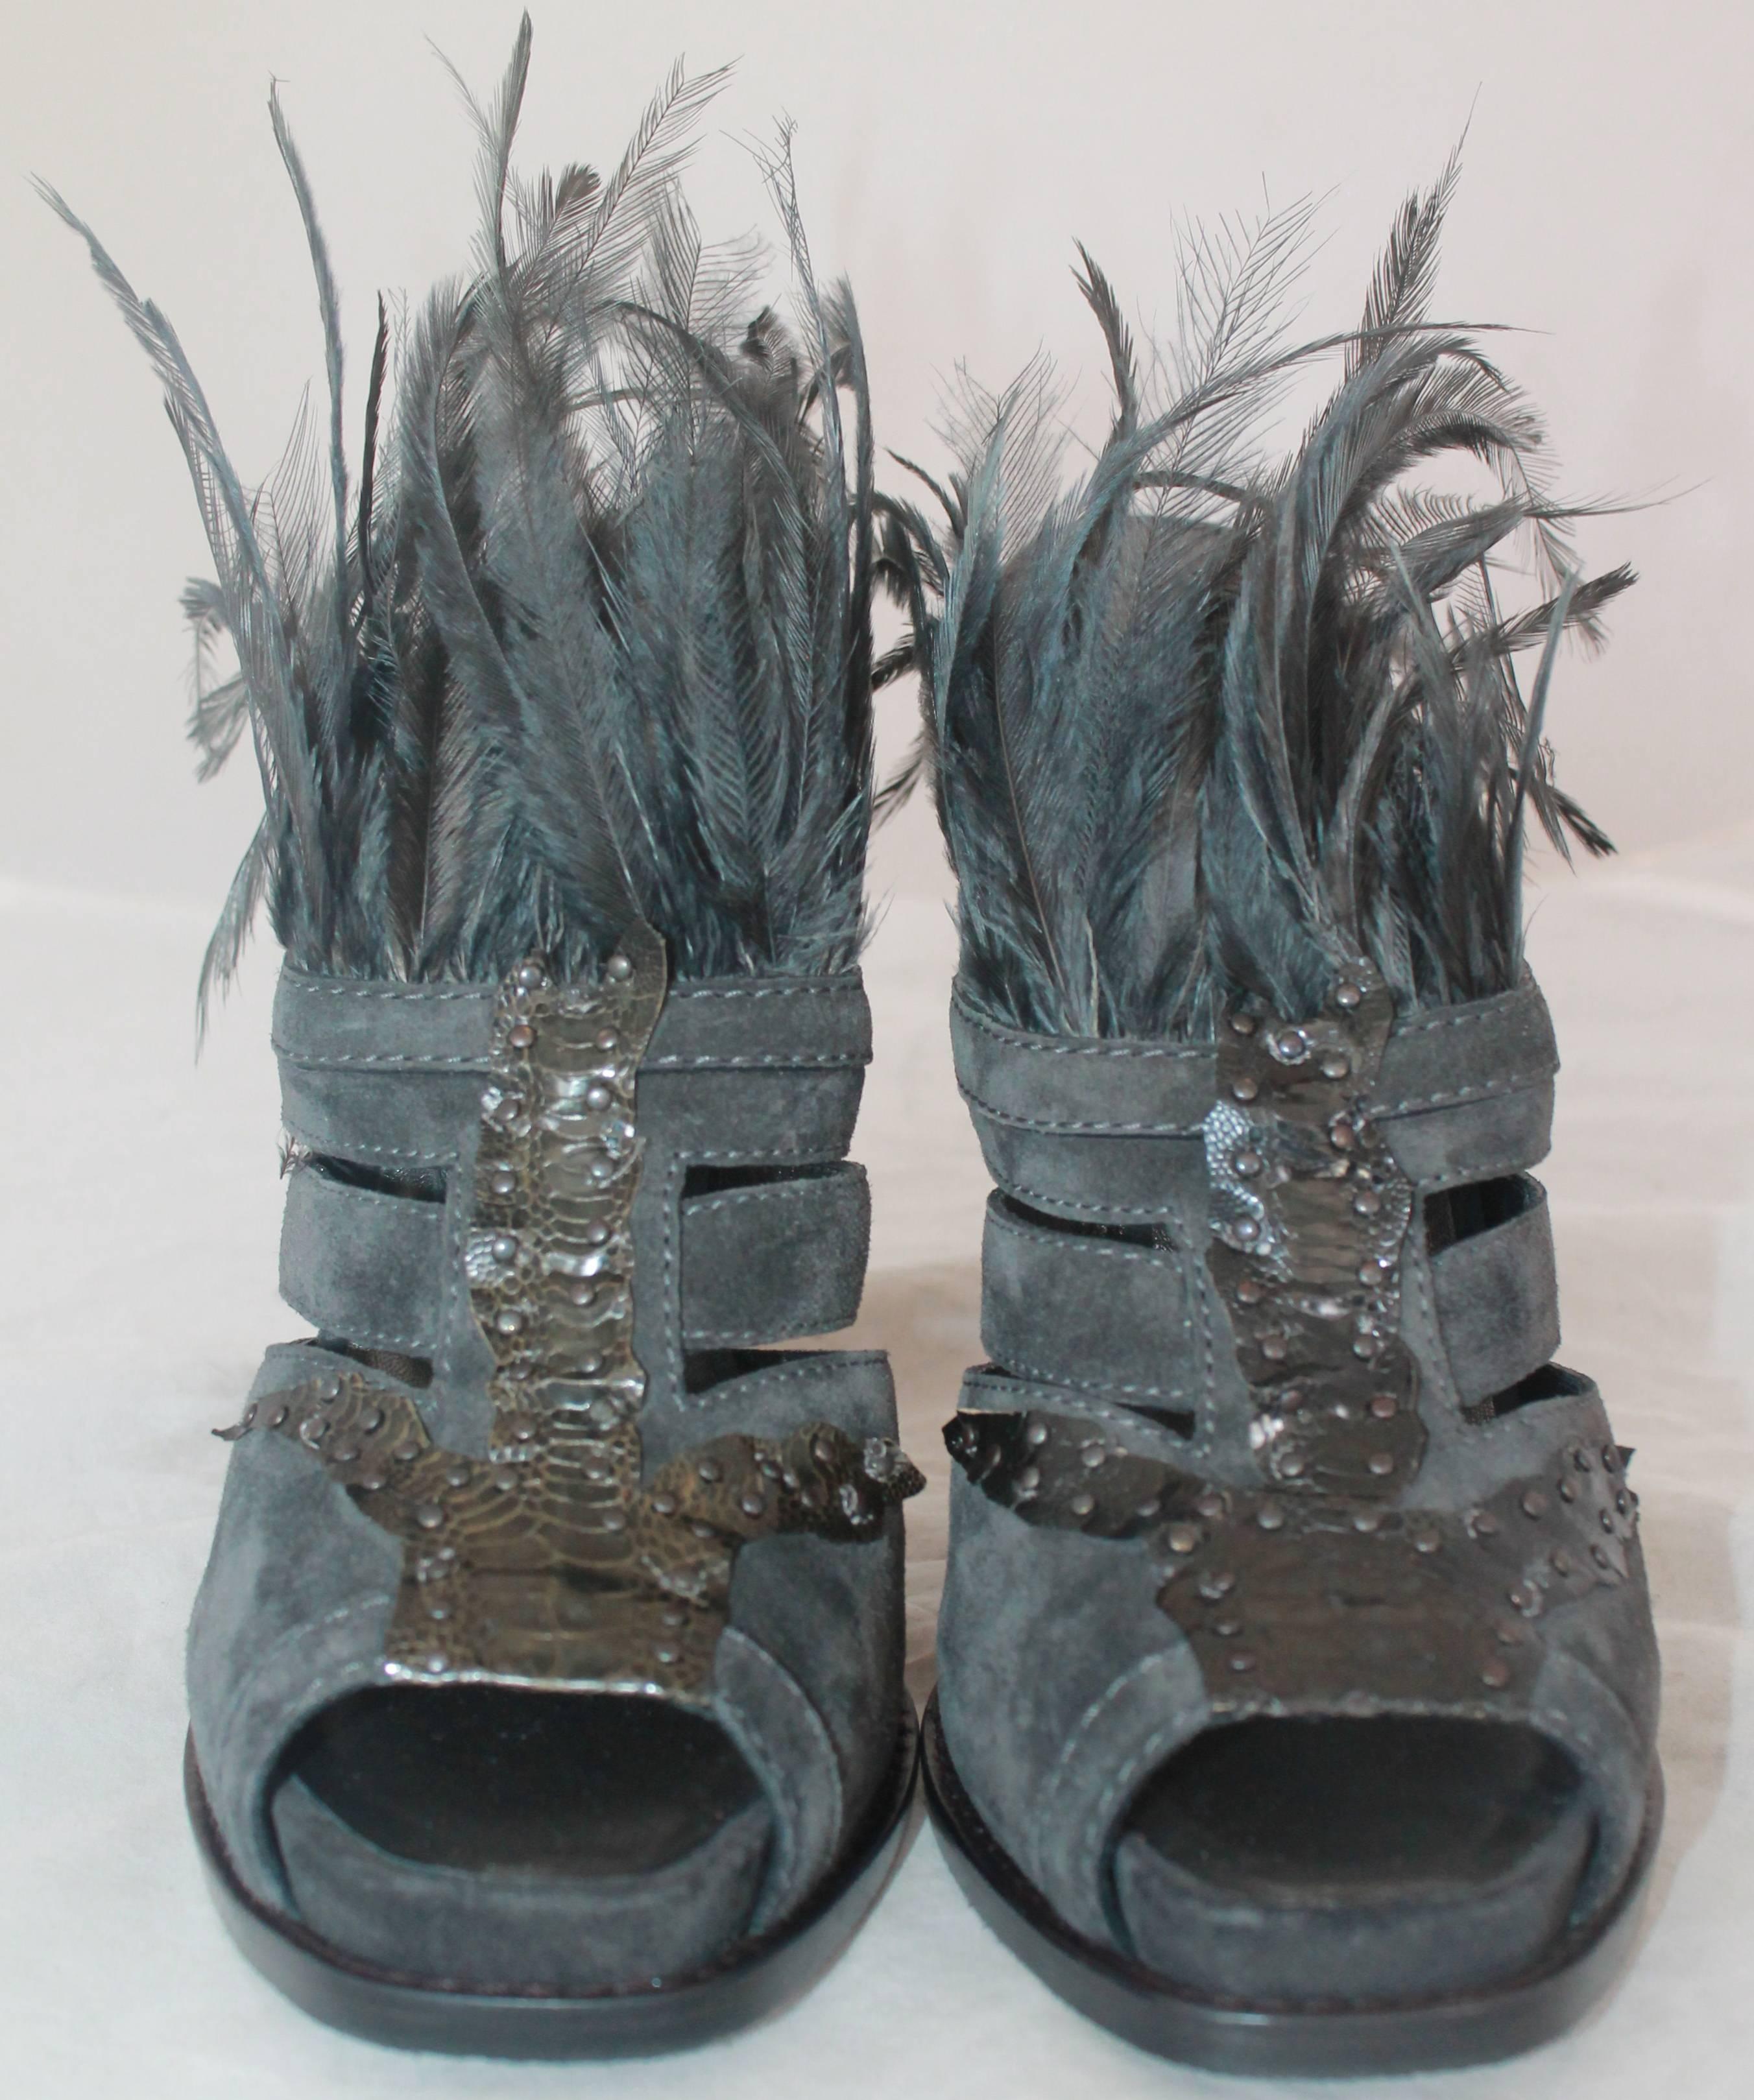 charcoal heels